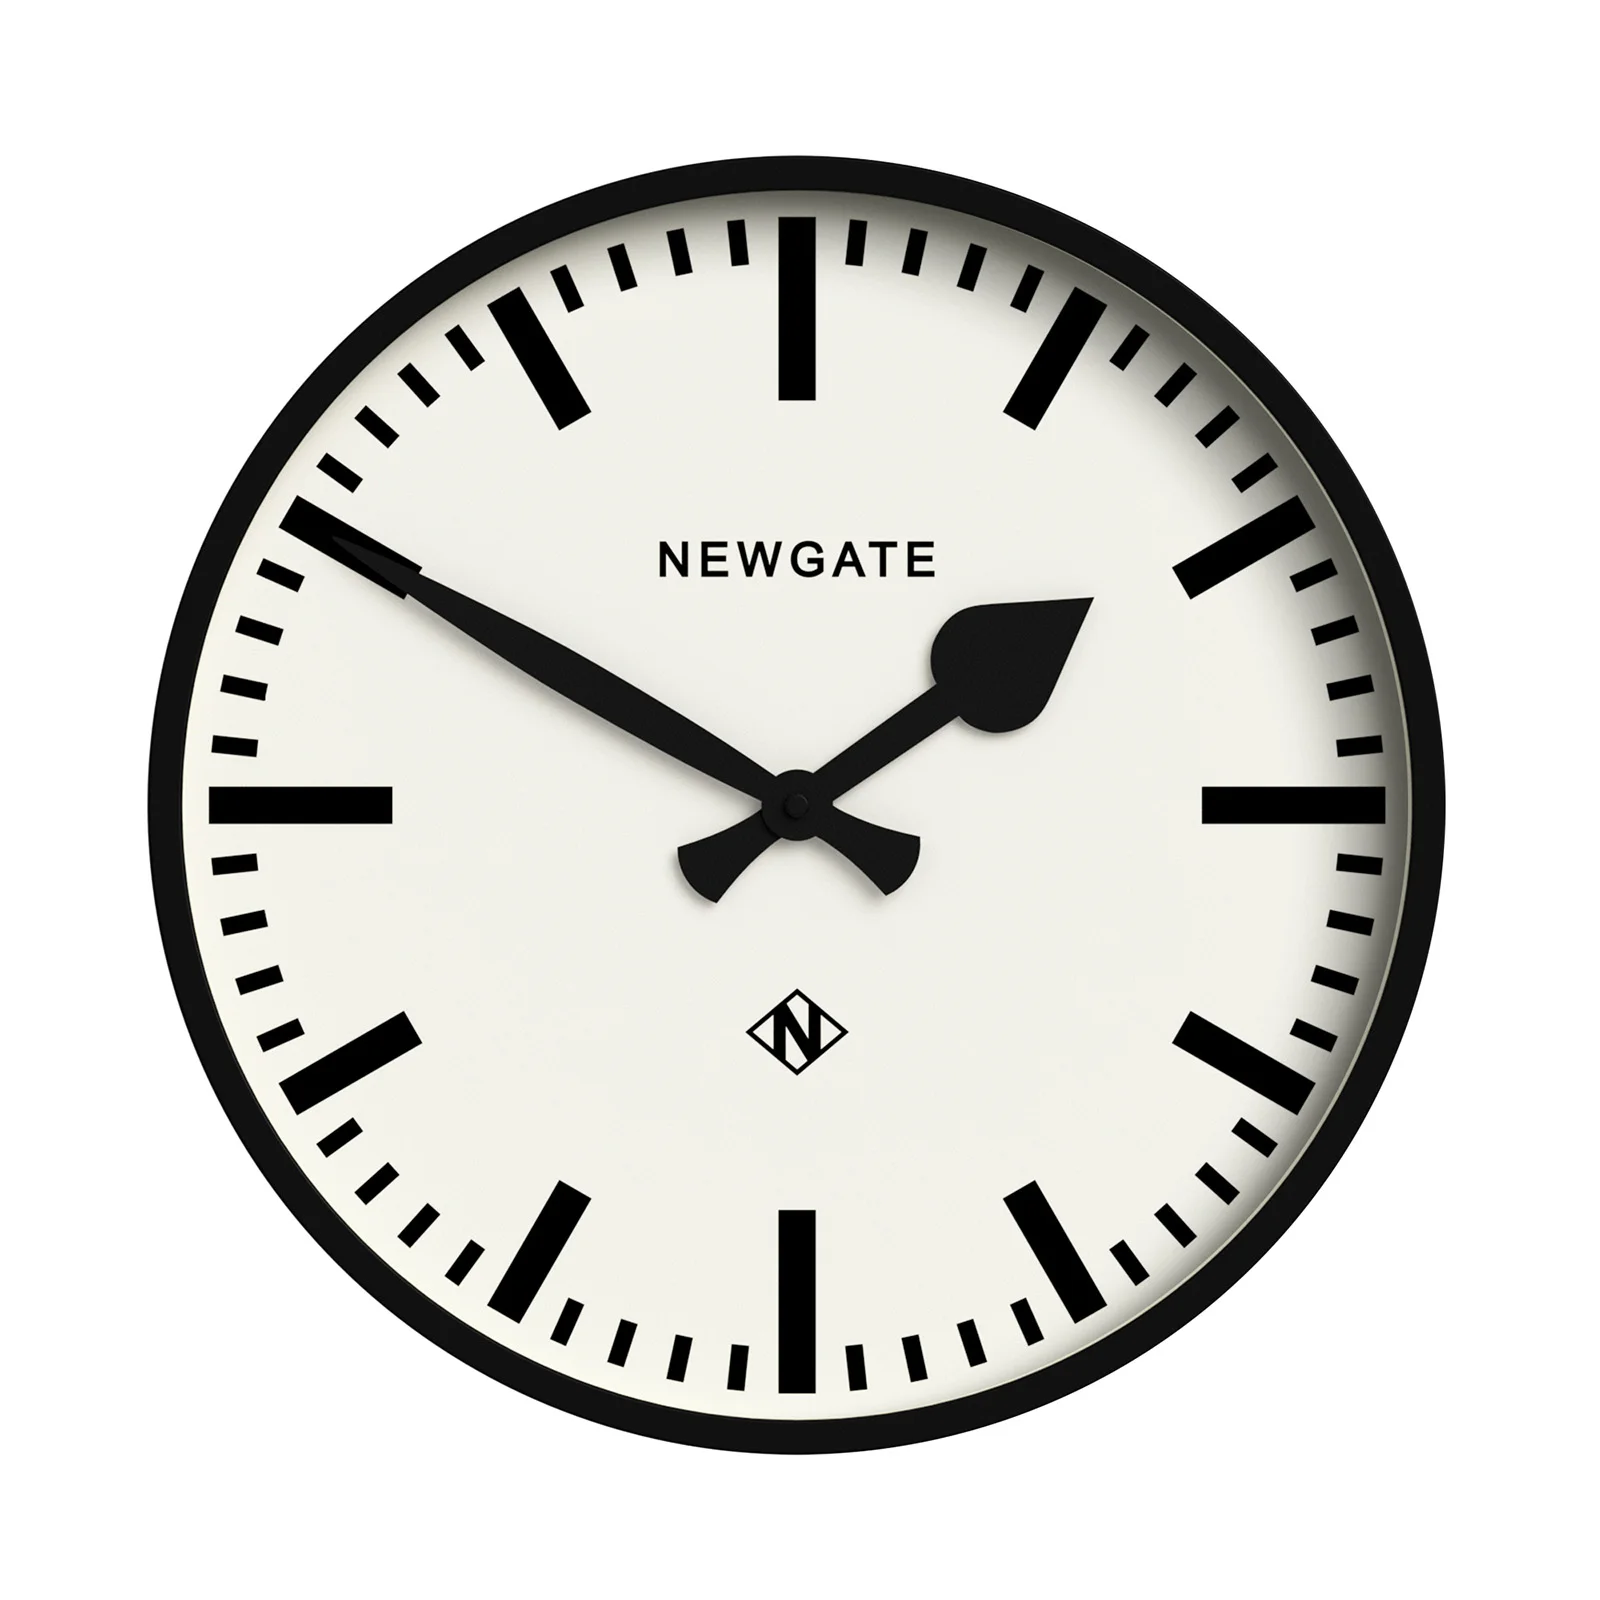 Newgate Number Three Railway Wall Clock - Black Image 1